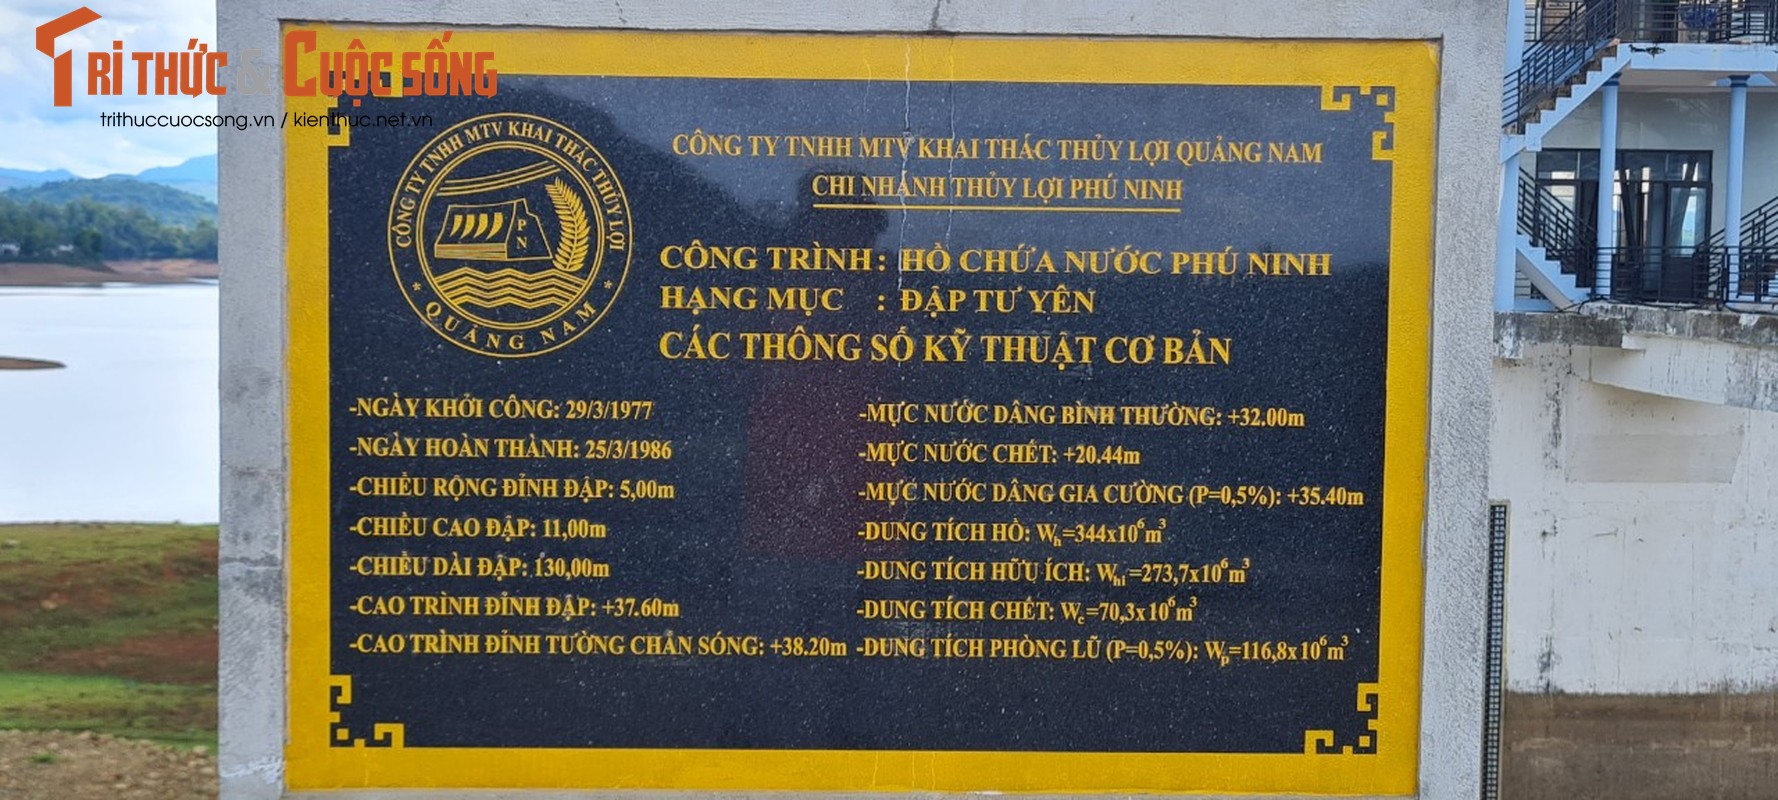 Den Phu Ninh, ngam “Ha Long thu nho” cua mien Trung-Hinh-4